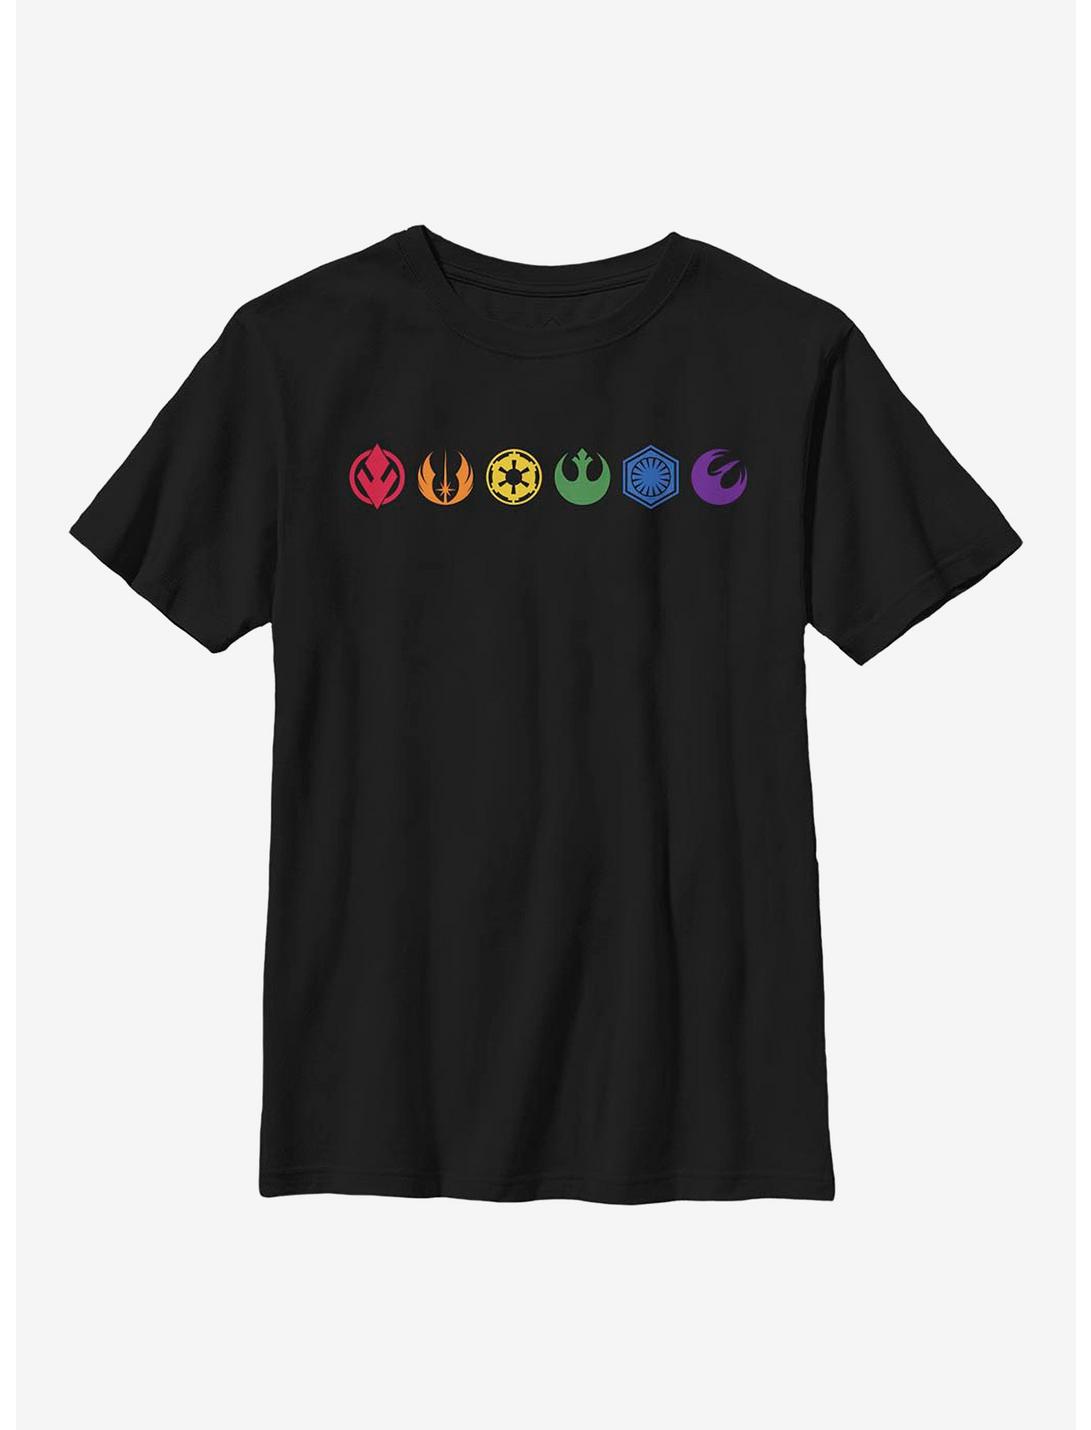 Star Wars Pride Rainbow Icons Youth T-Shirt, BLACK, hi-res